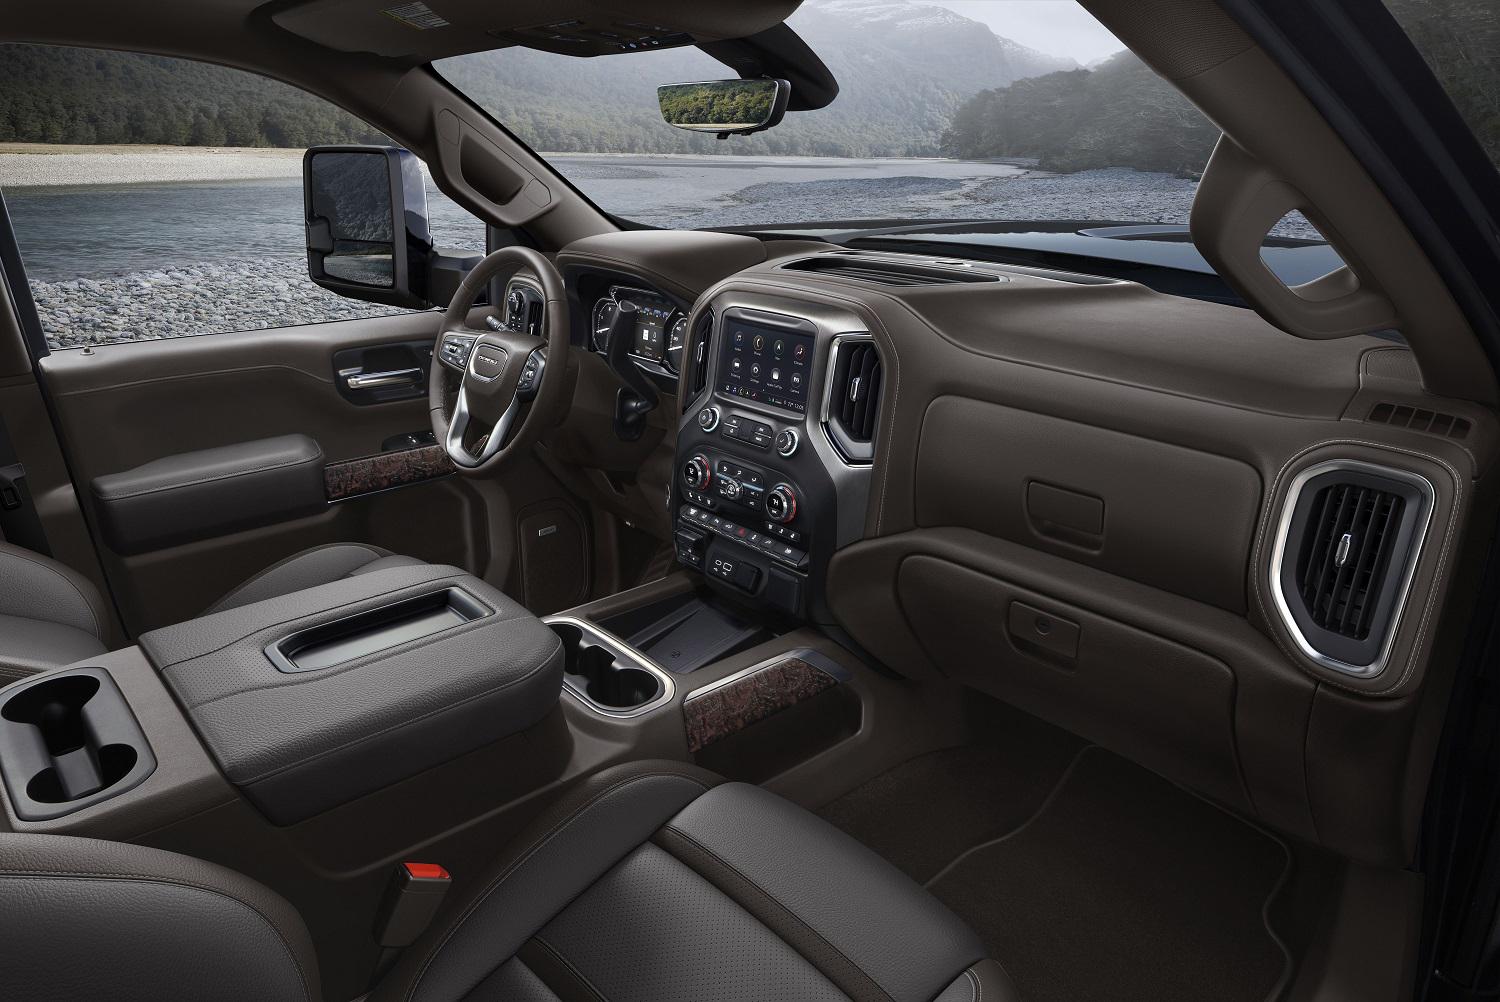 2020 gmc sierra hd boasts world class trailering tech denali interior